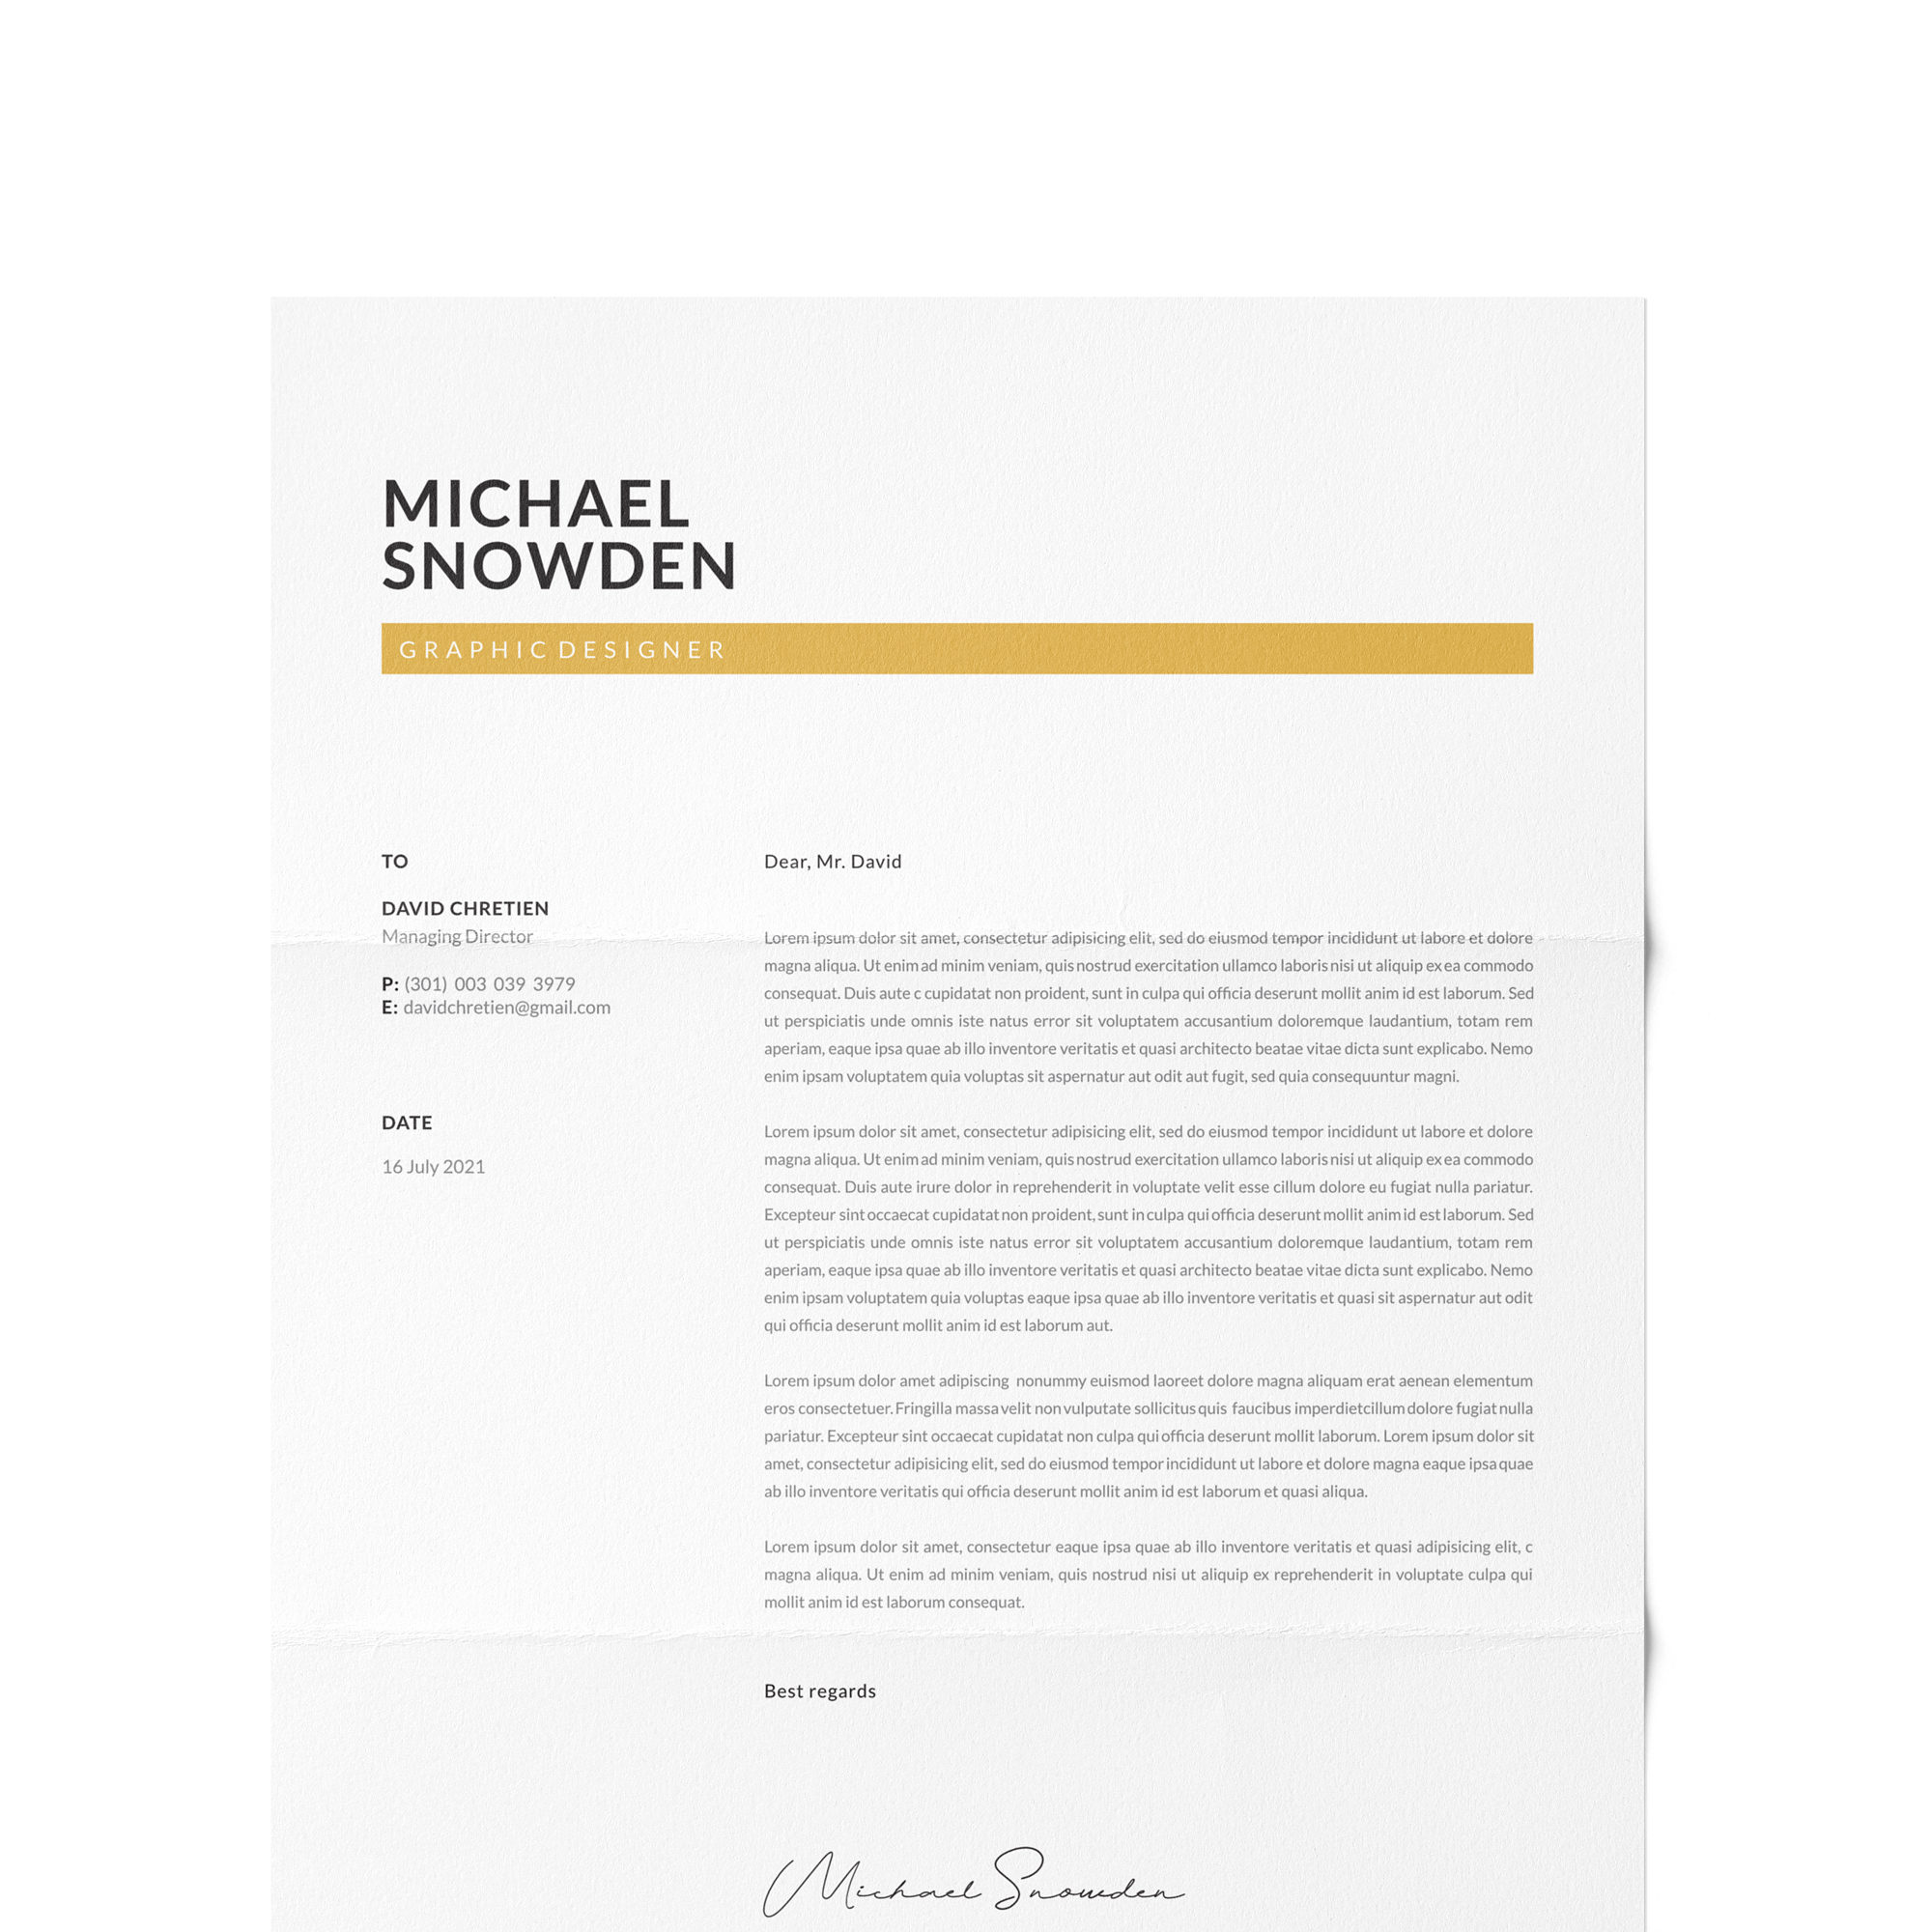 CV #82 Michael Snowden